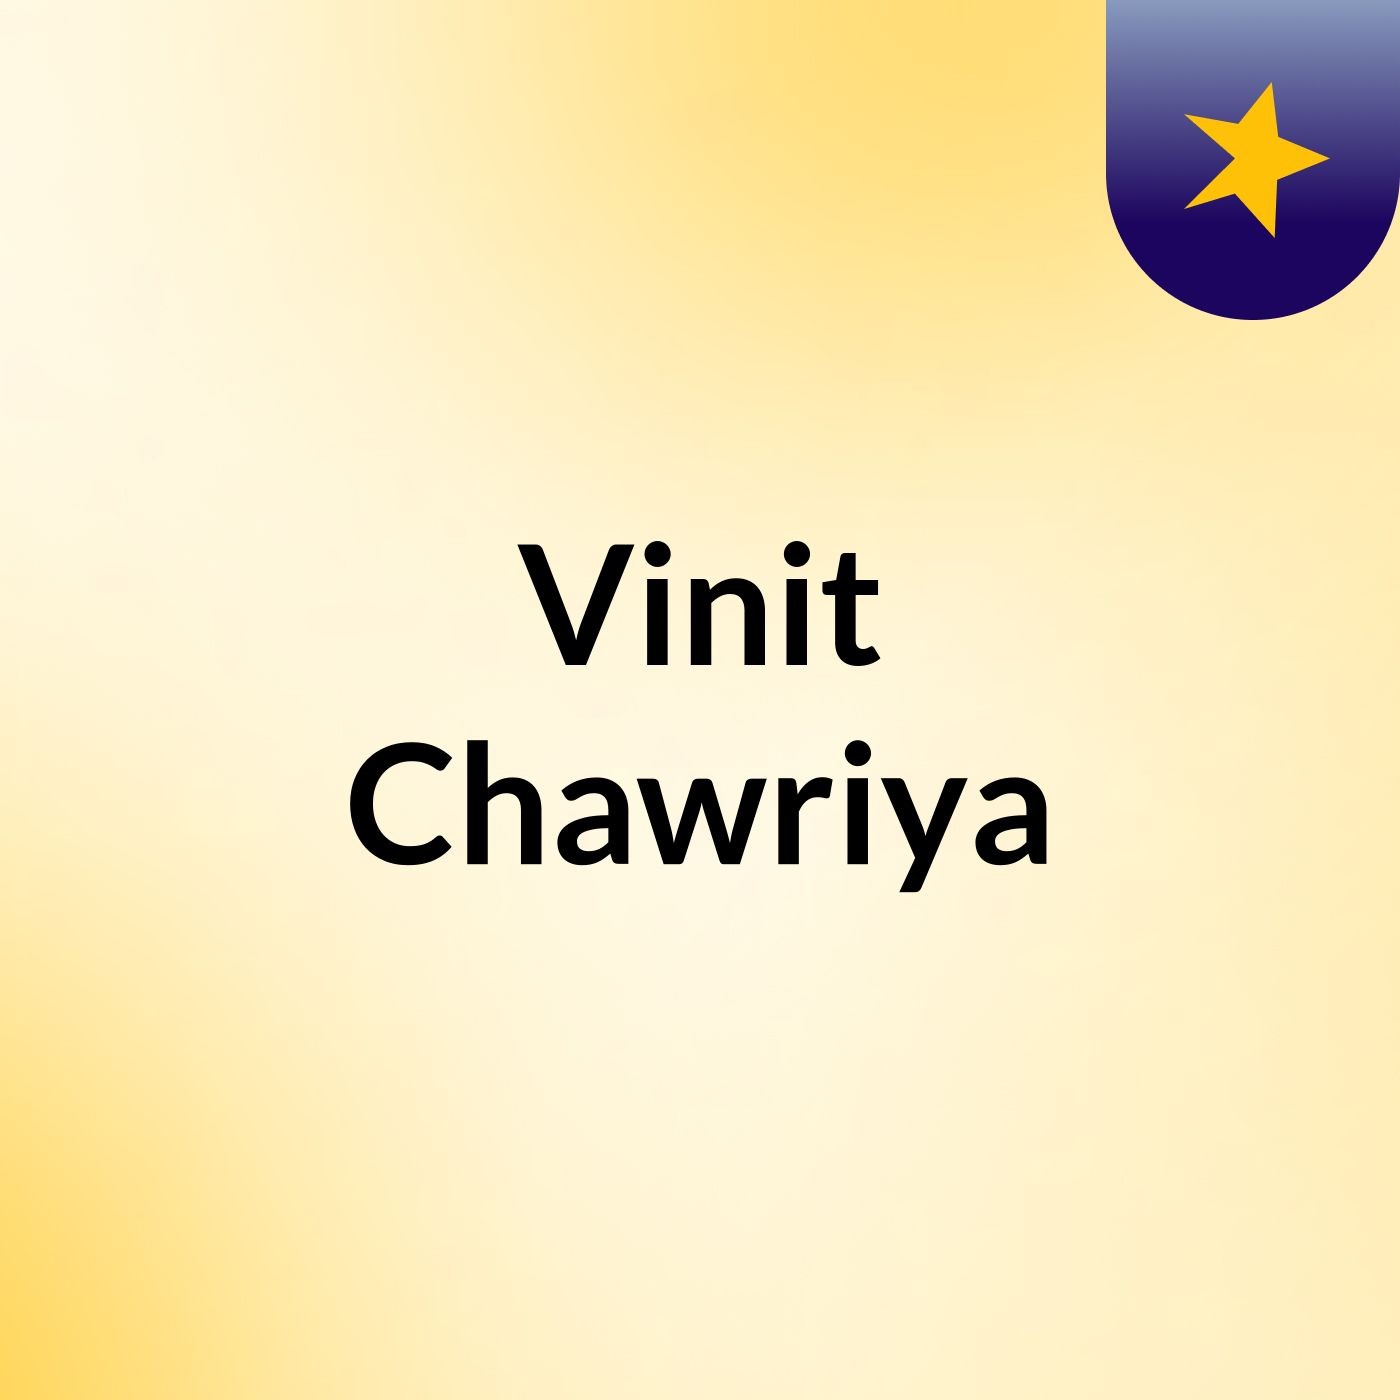 Vinit Chawriya